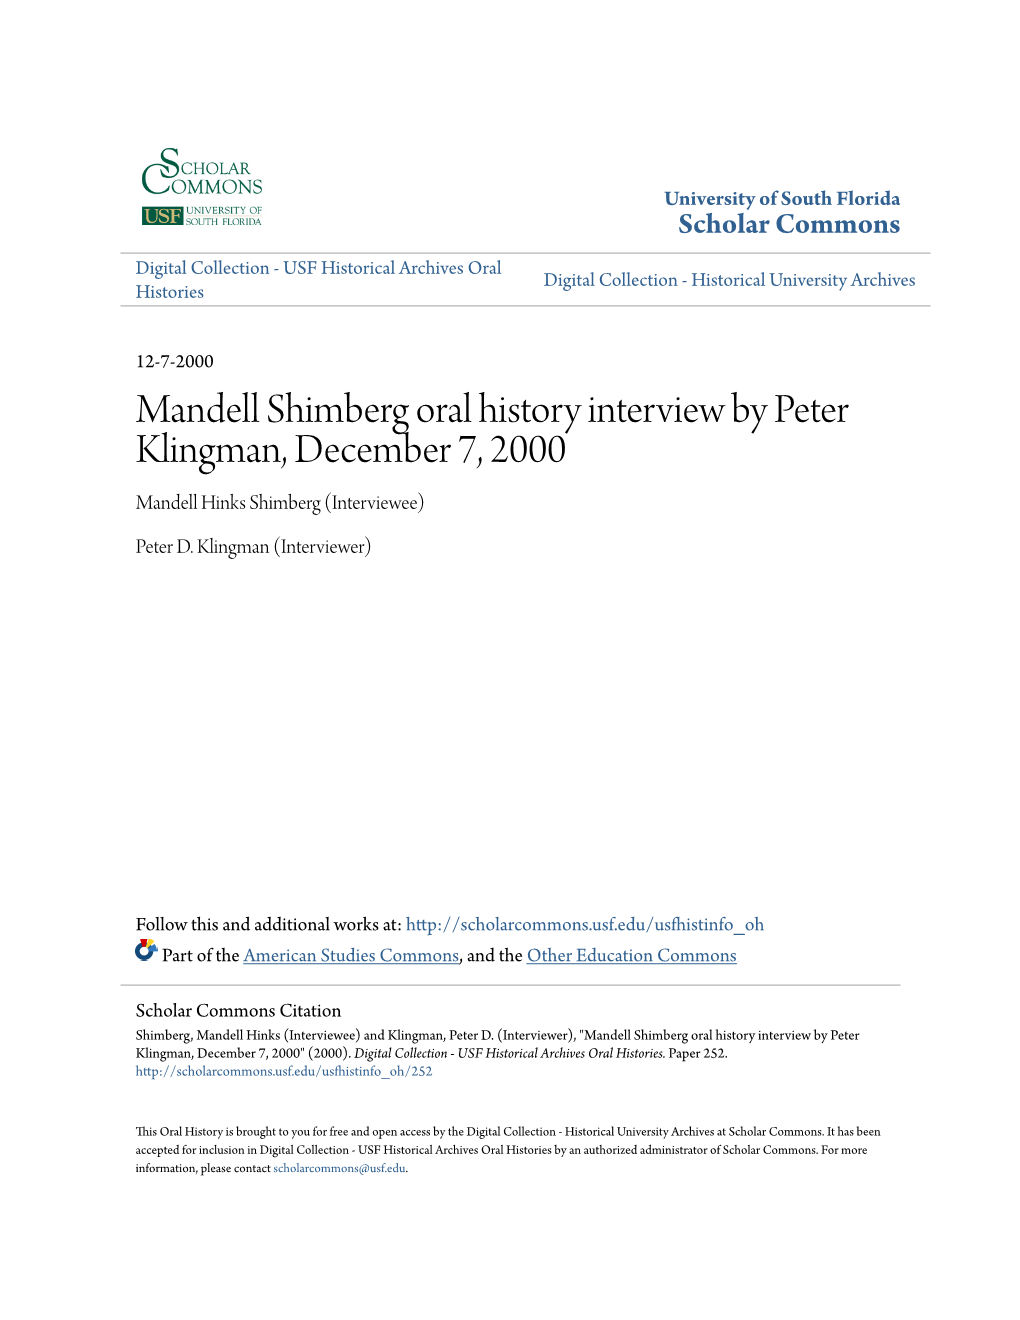 Mandell Shimberg Oral History Interview by Peter Klingman, December 7, 2000 Mandell Hinks Shimberg (Interviewee)